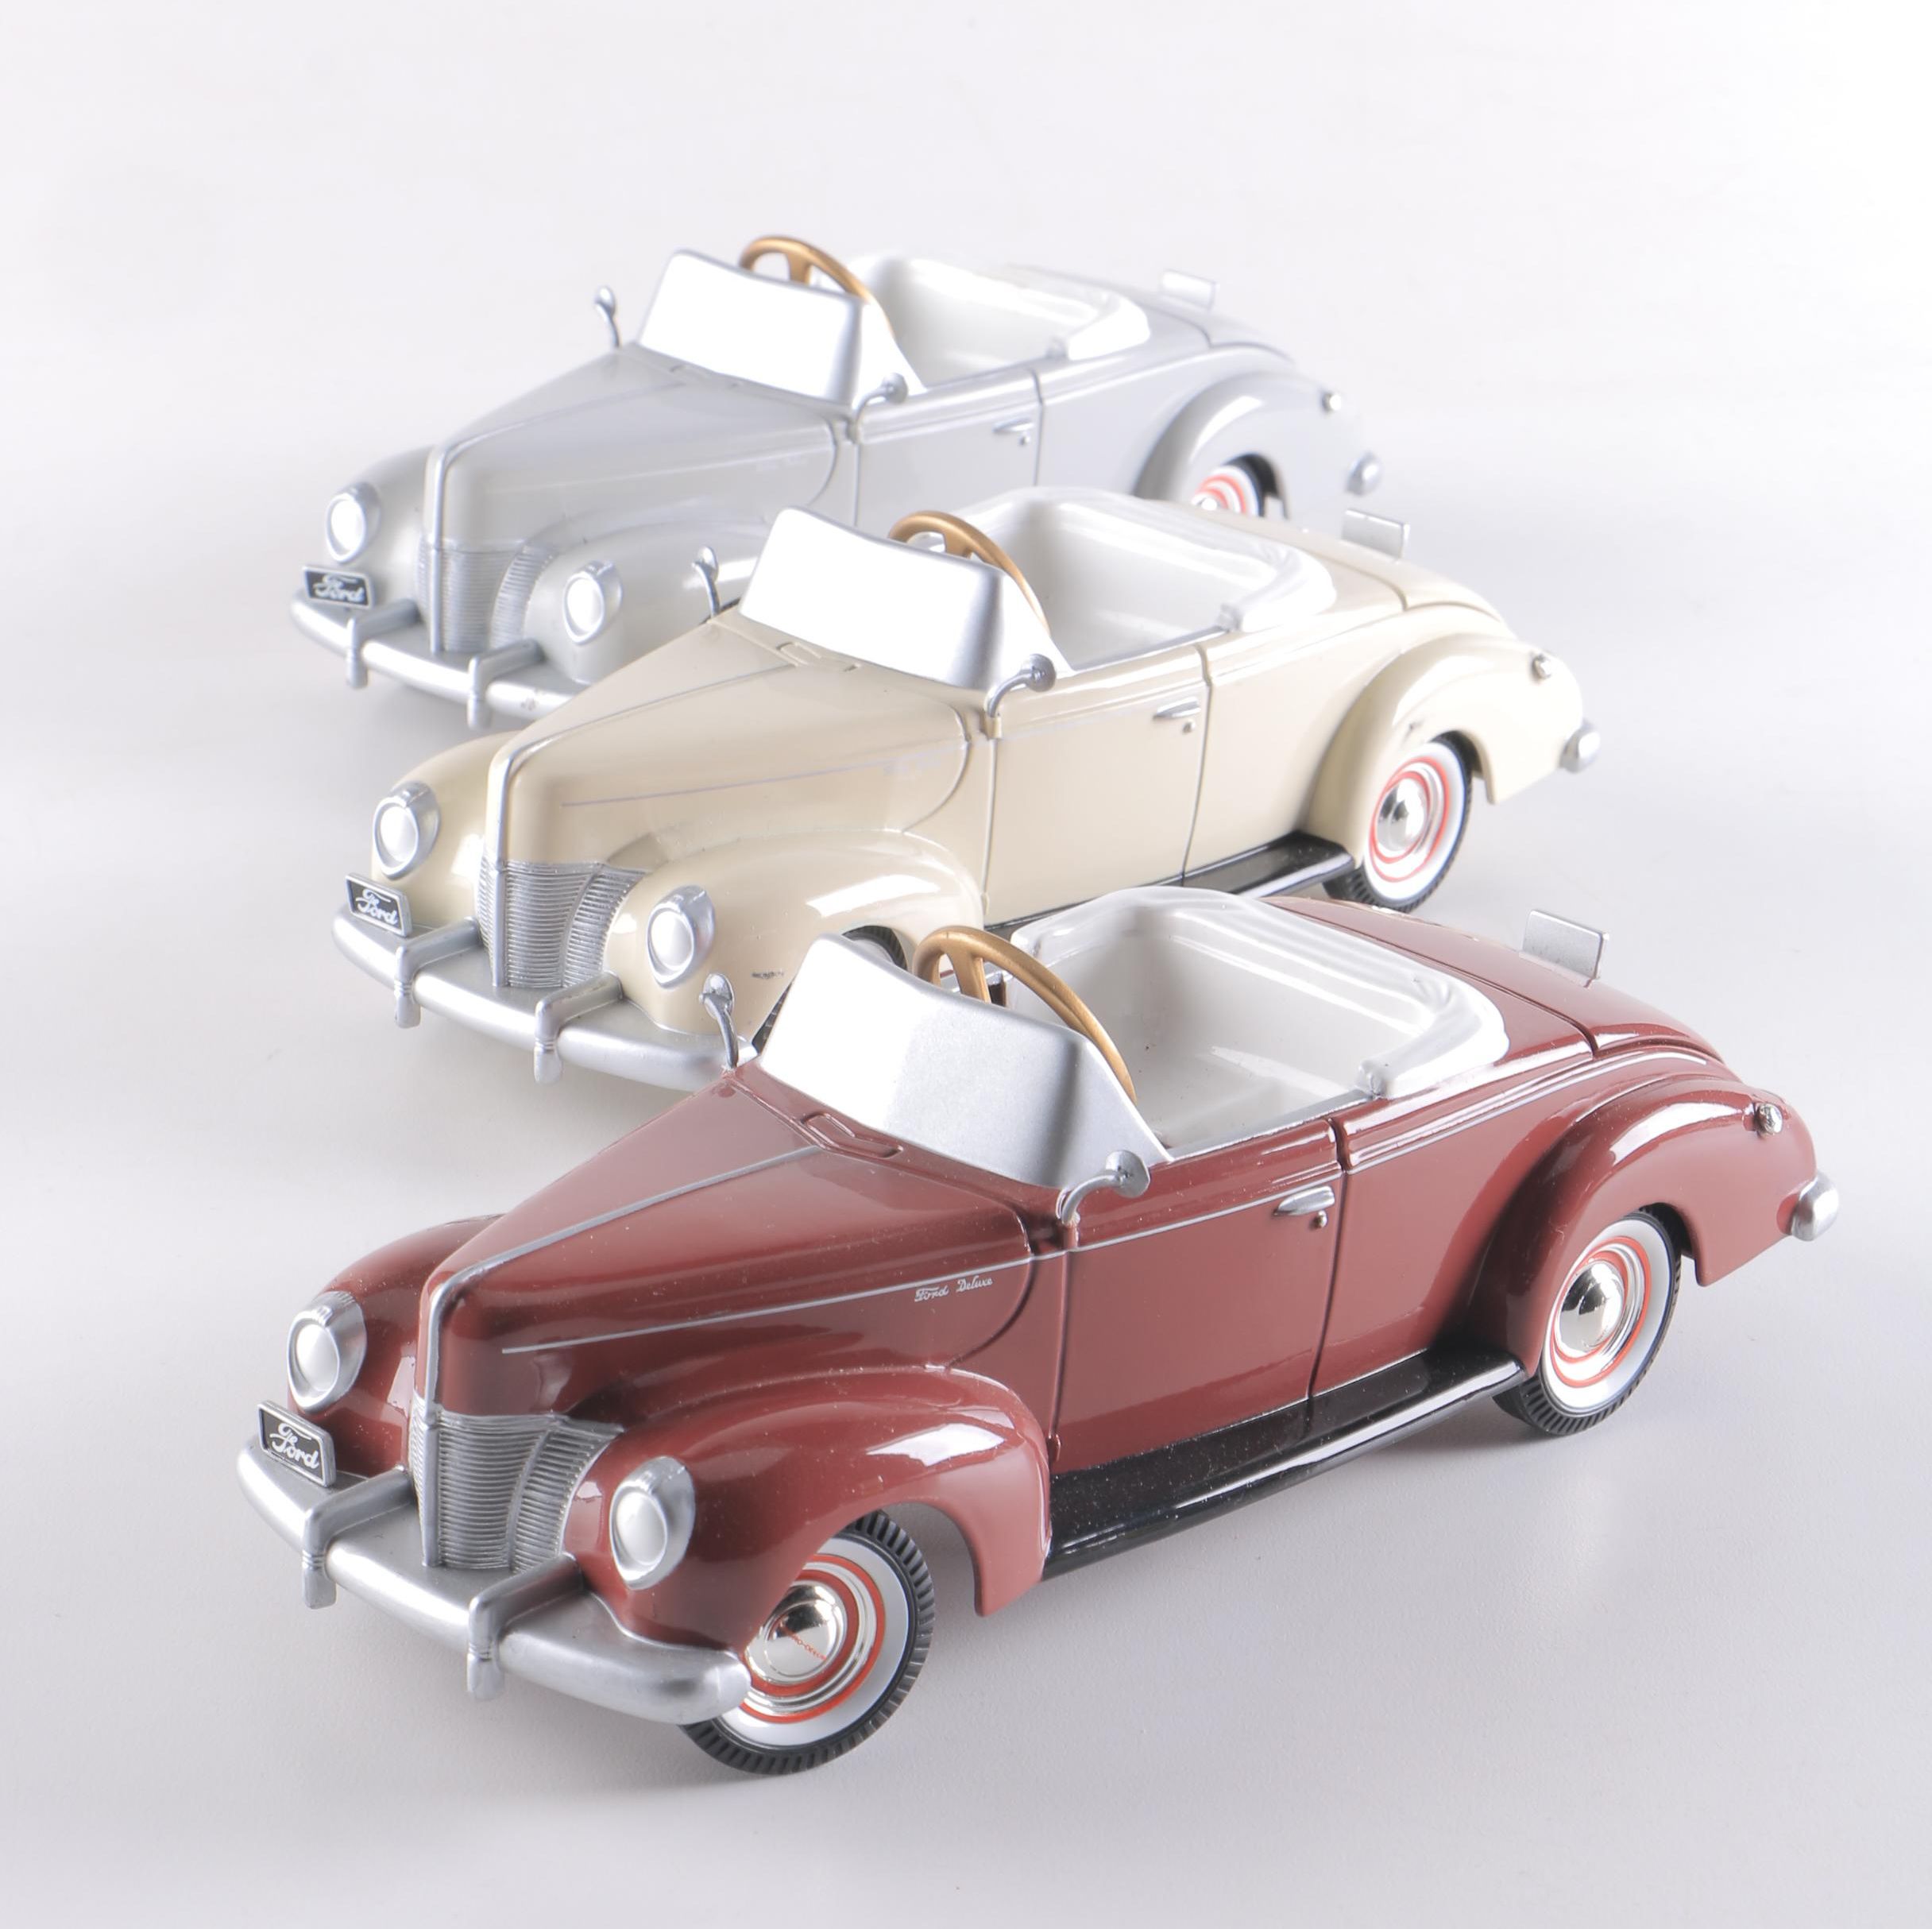 miniature pedal cars